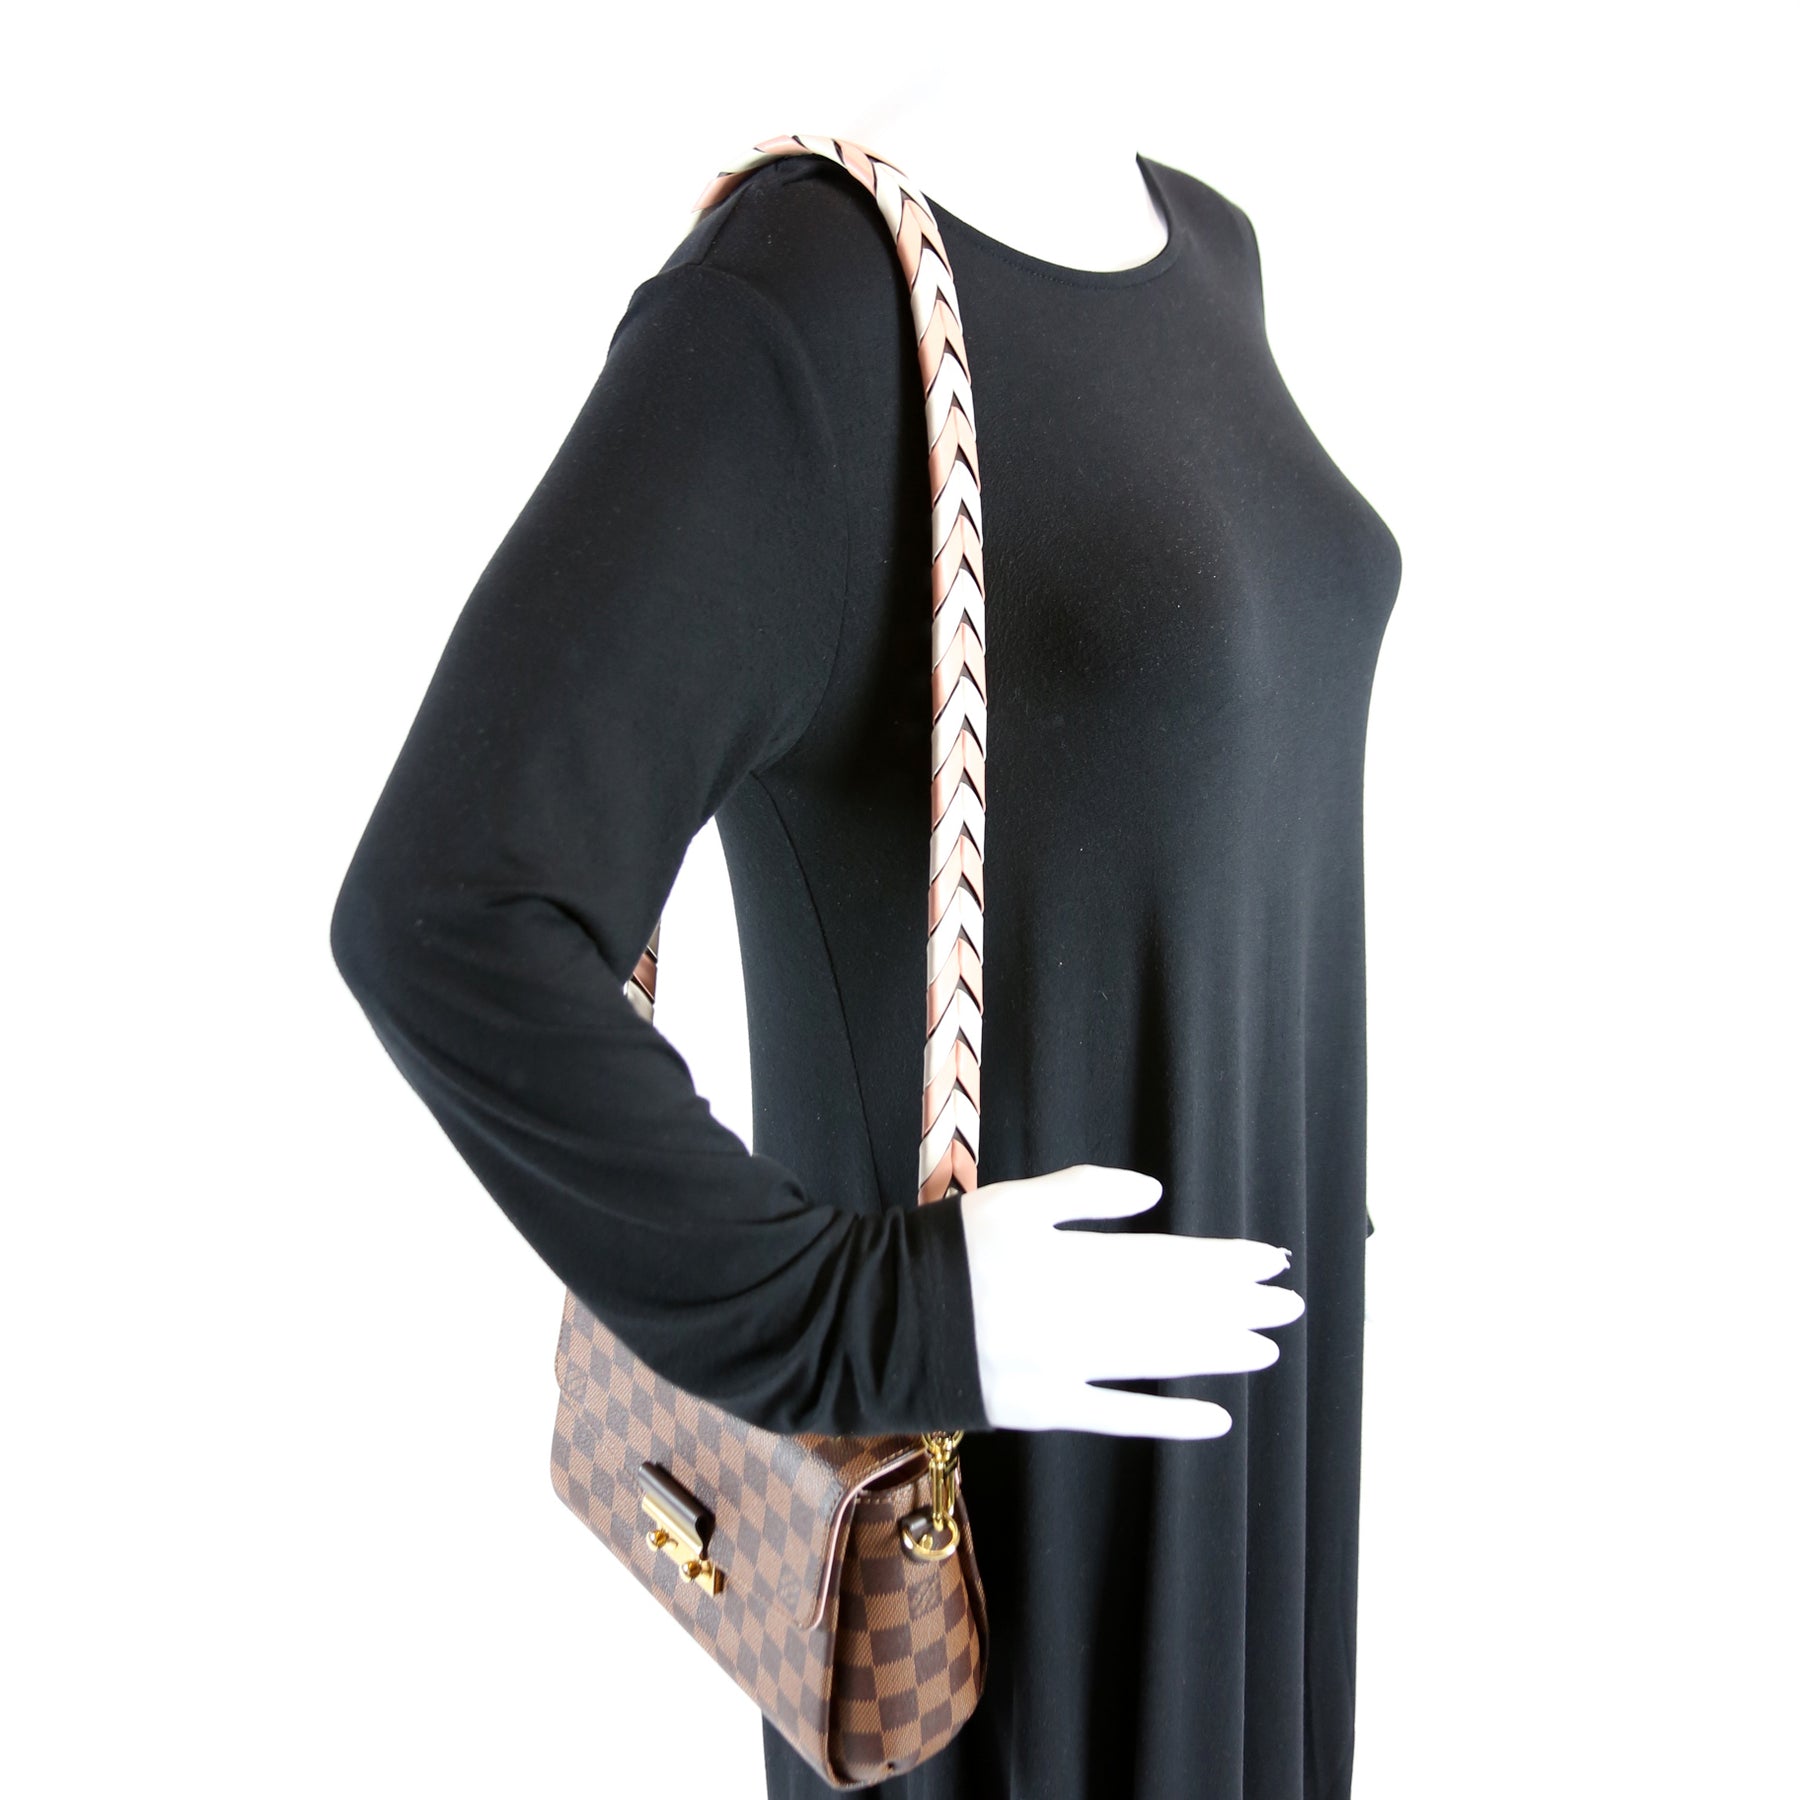 Louis Vuitton Croisette Damier Ebene with Braided Handle Bag